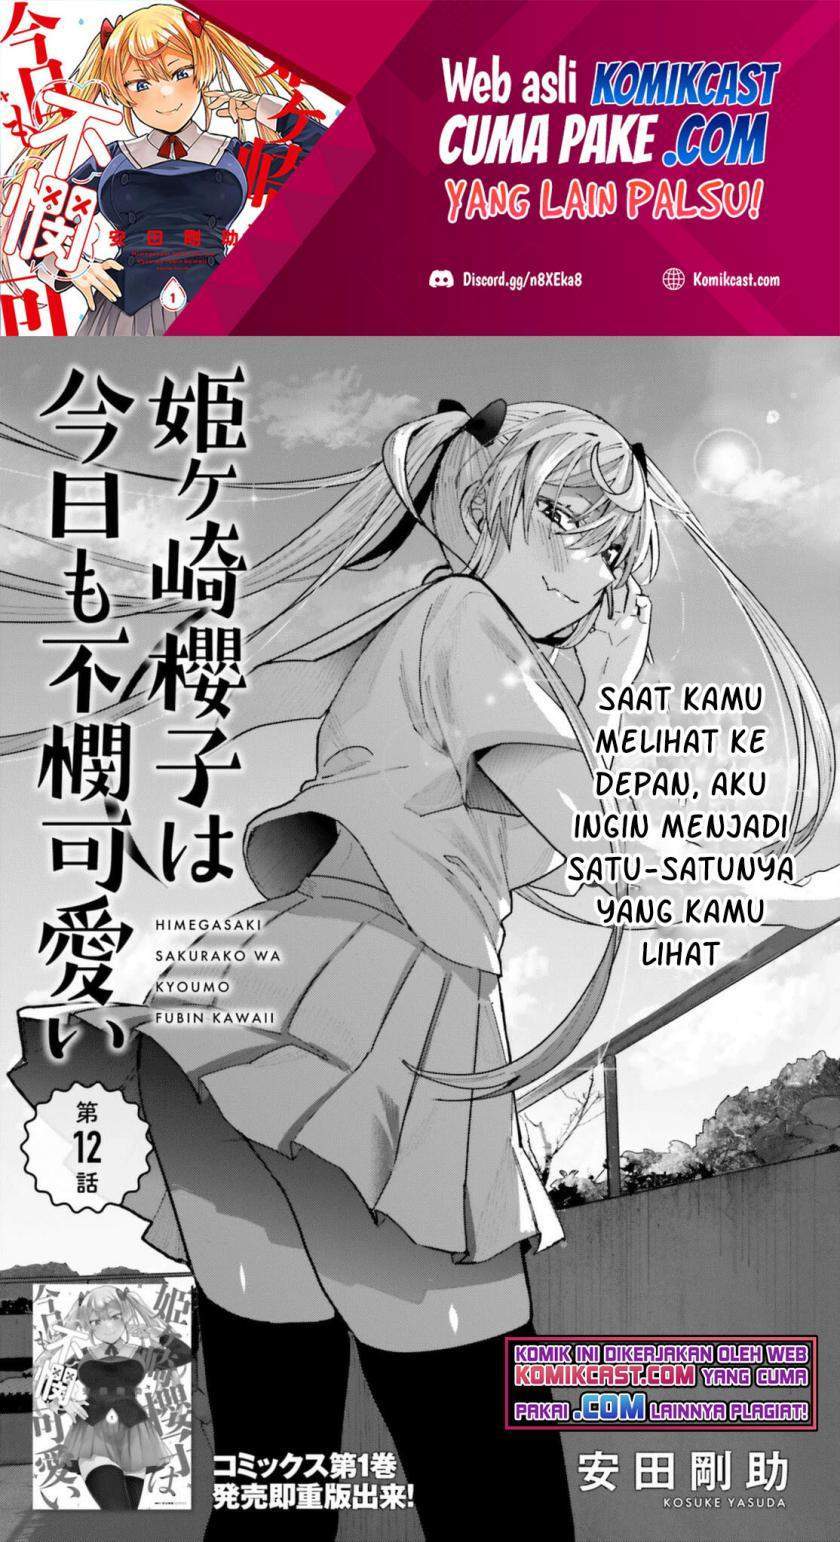 Himegasaki Sakurako Wa Kyoumo Fubin Kawaii! Chapter 12 - 117